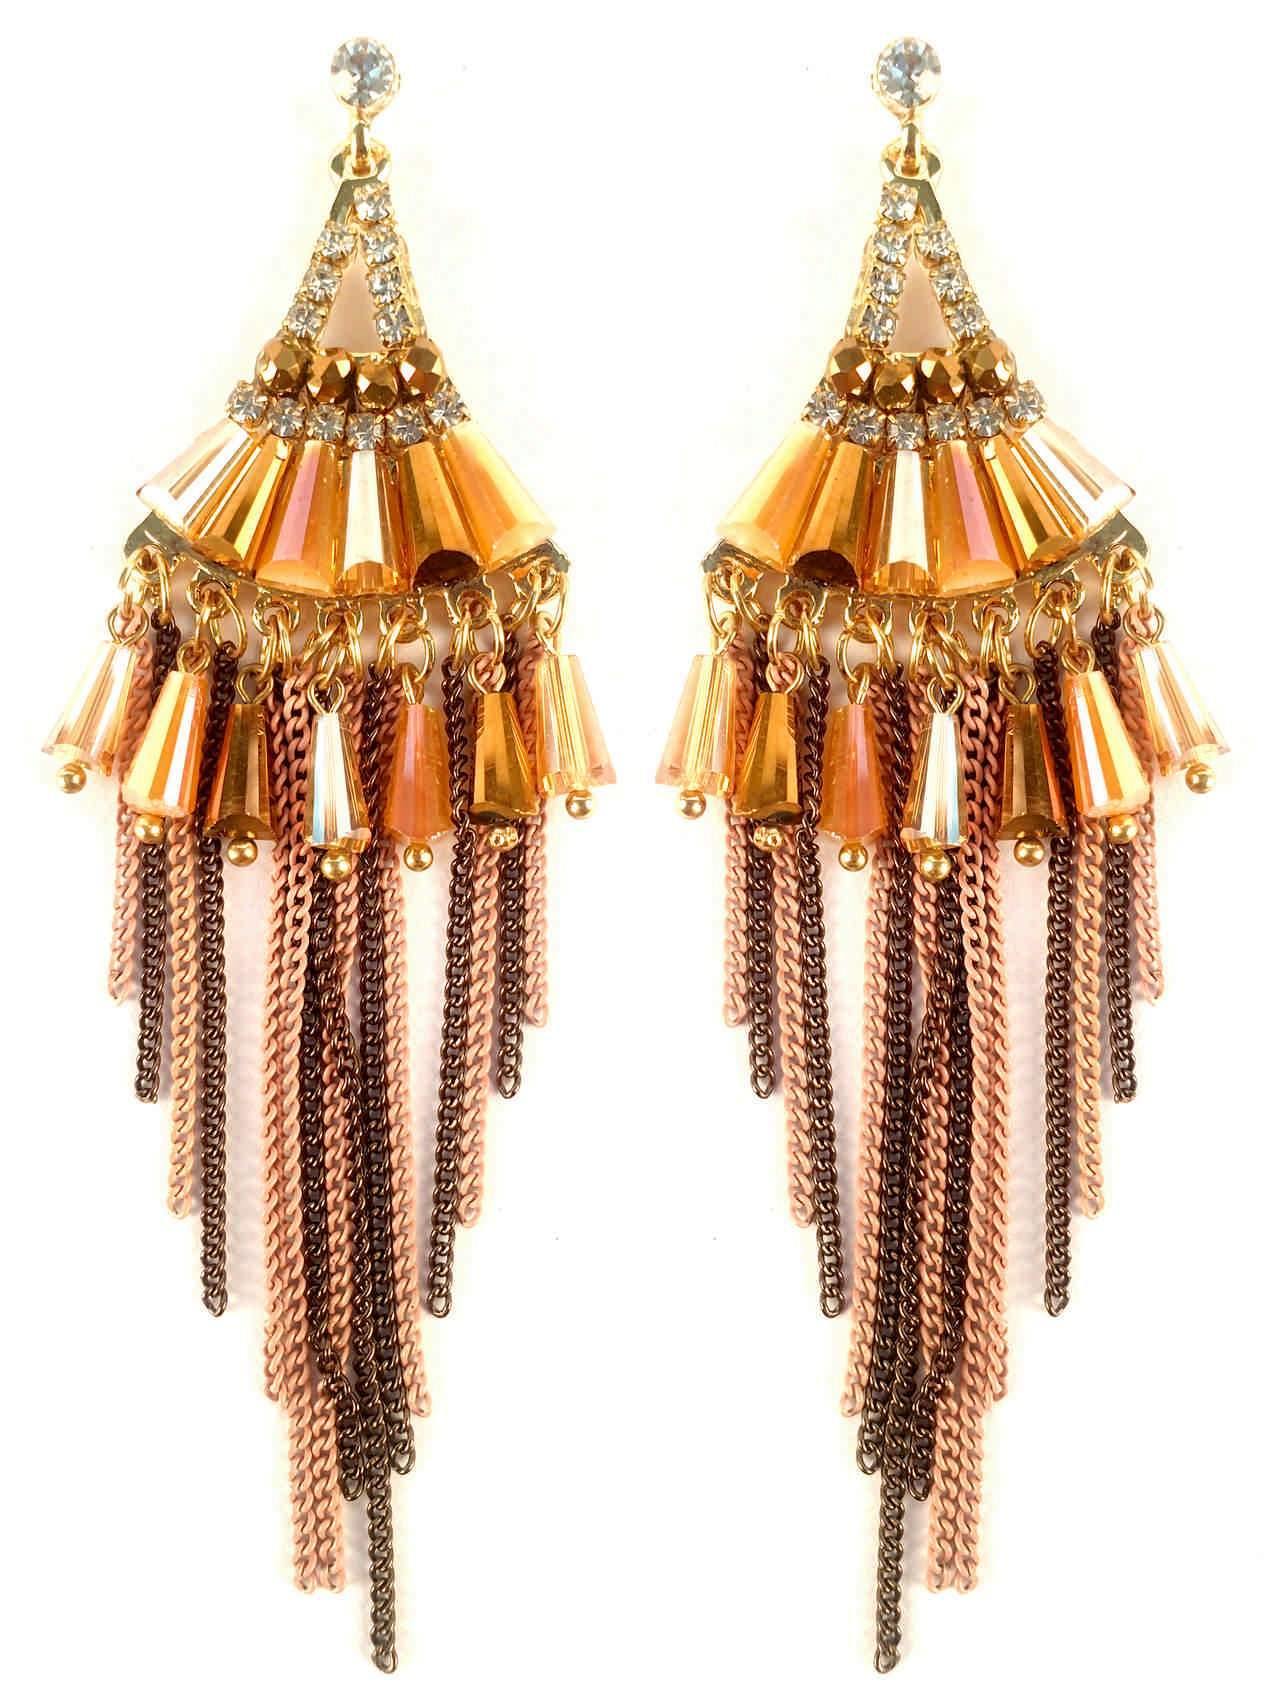 Indian Petals Chandelier Design Artificial Fashion Dangler Earrings Jhumka with Tassales for Girls Women, Brown